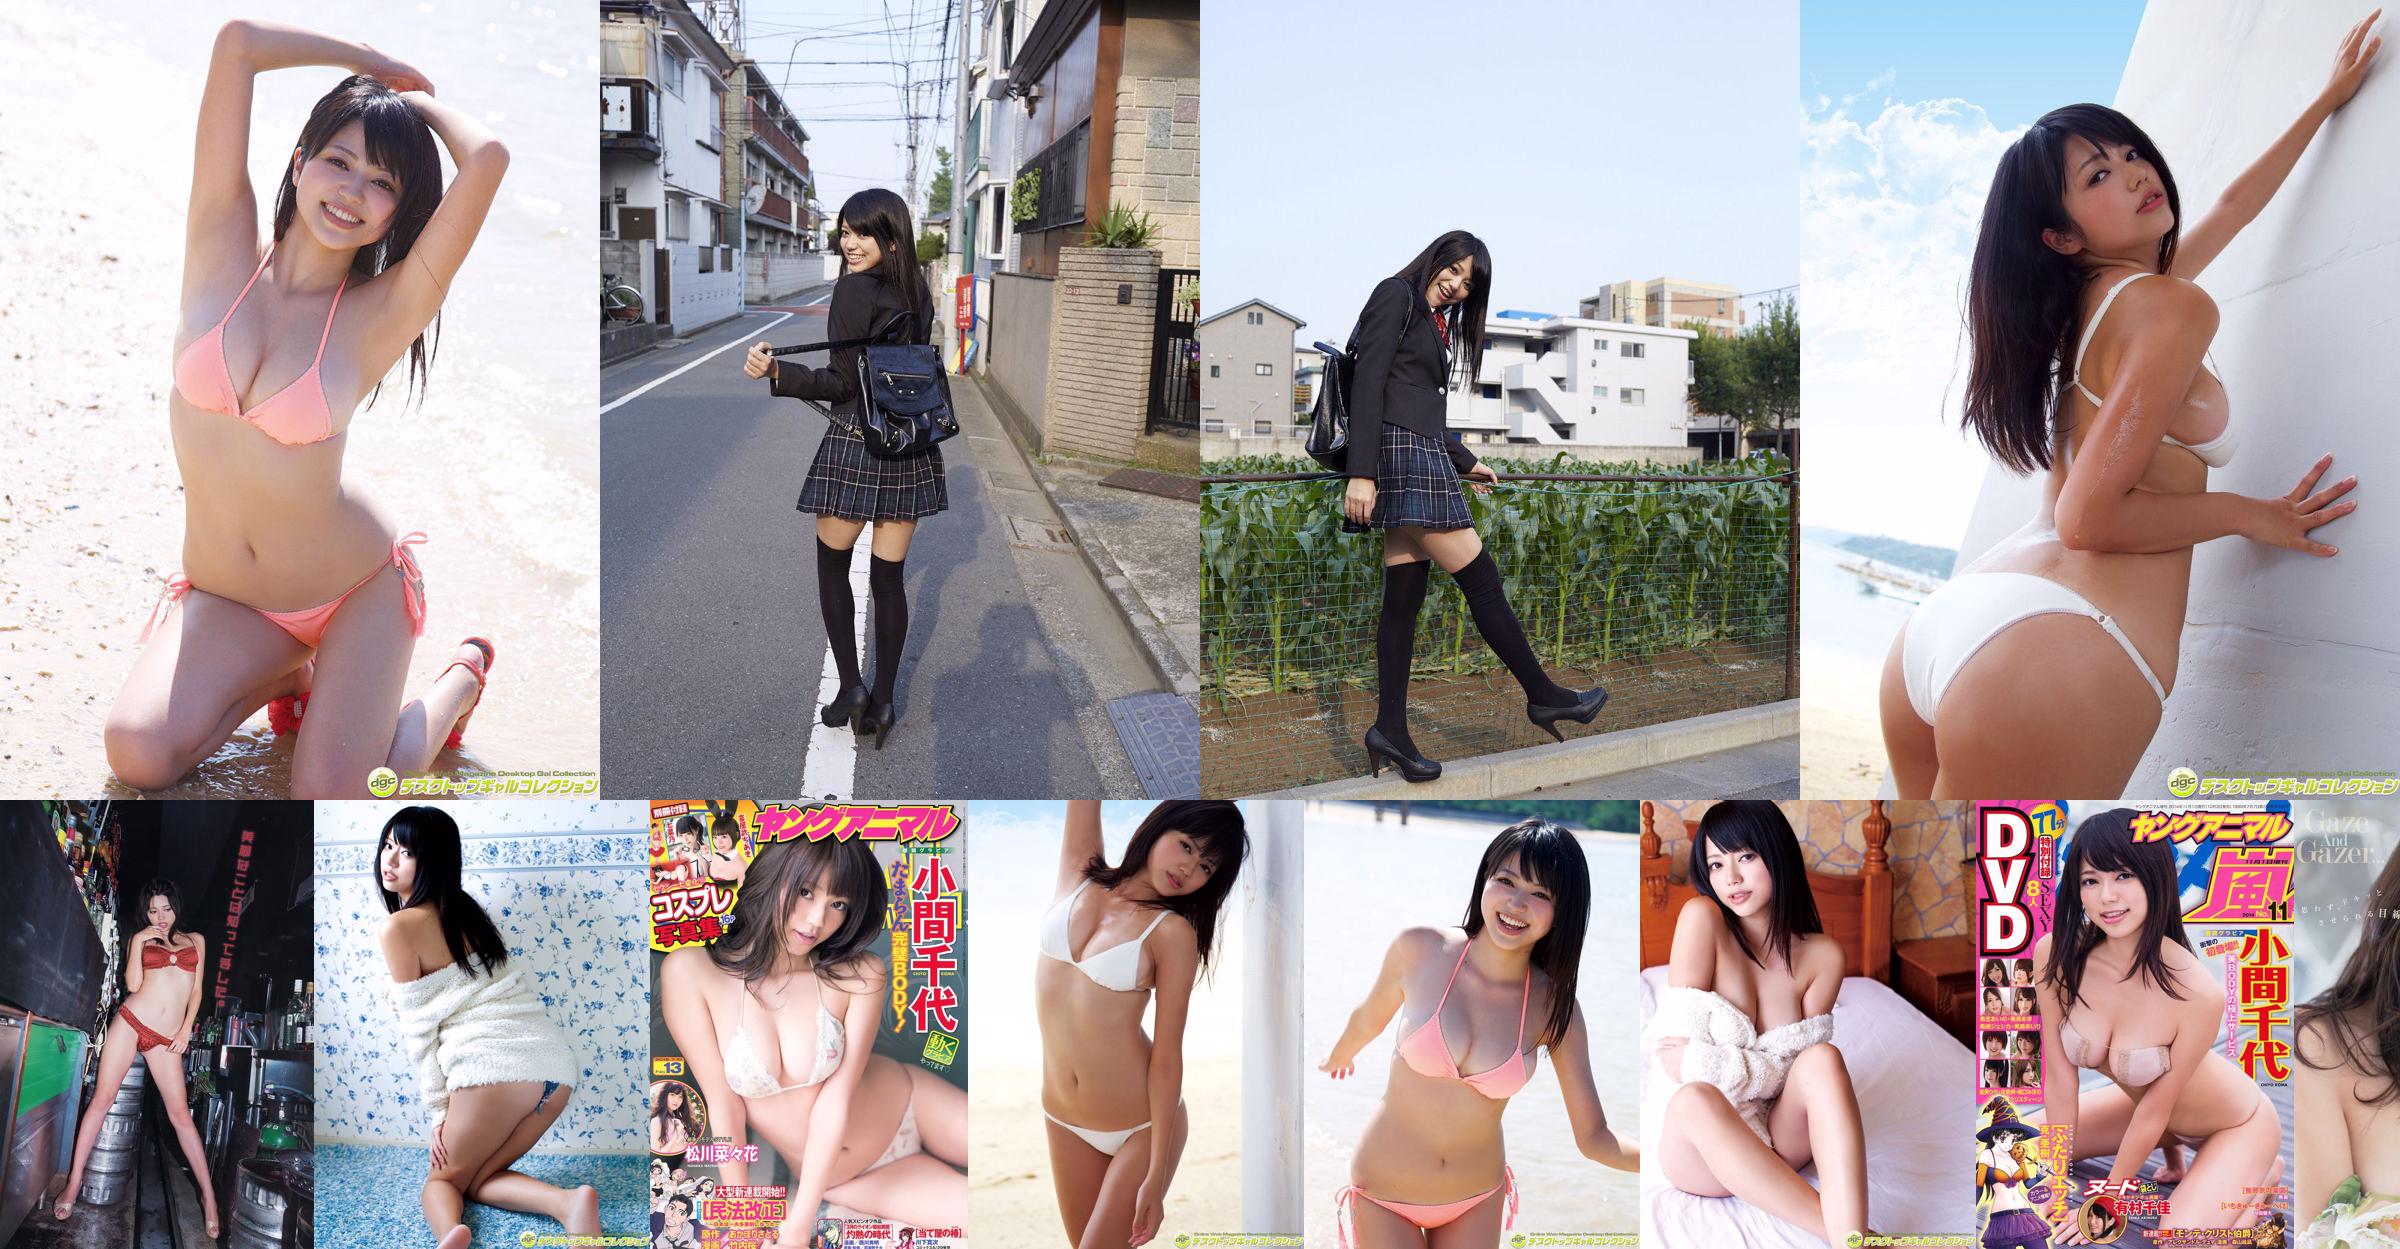 Chiyo Koma [Edición especial de Young Animal Arashi] No.11 2014 Photo Magazine No.492be1 Página 1